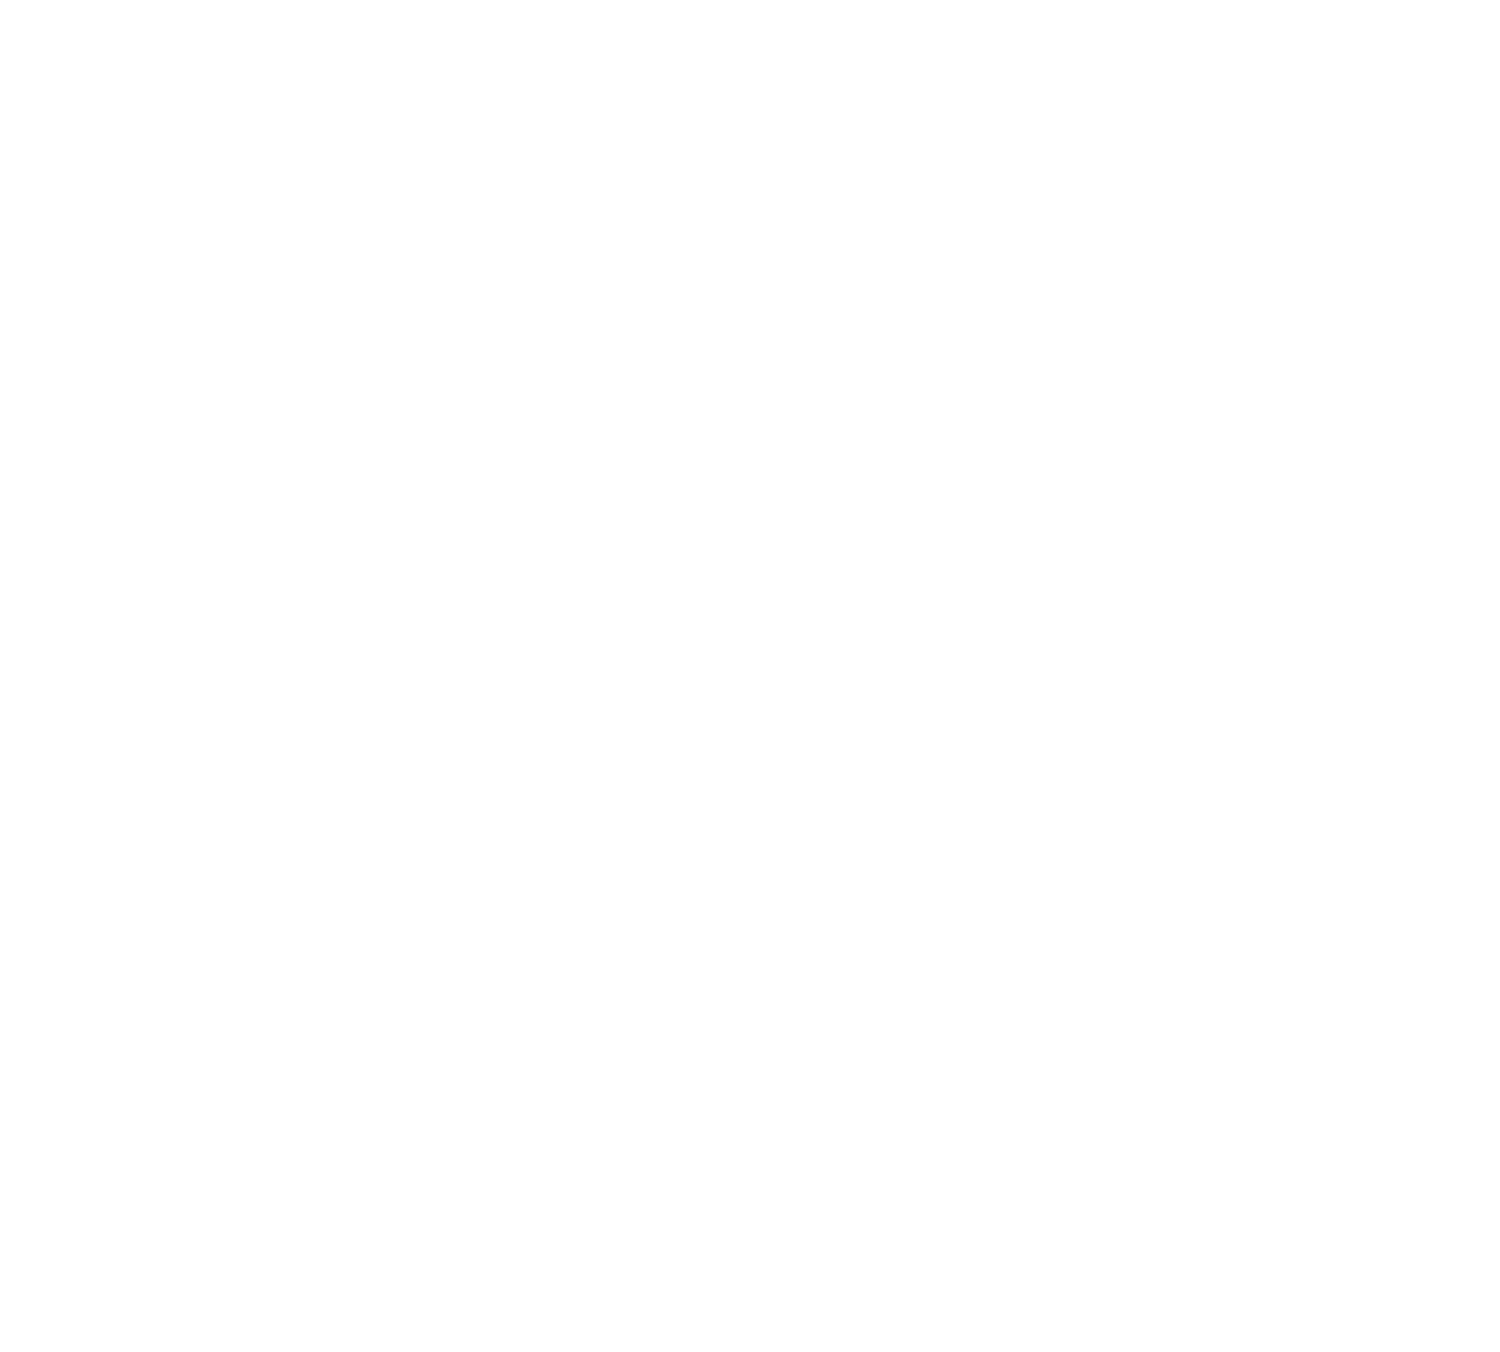 K.M. Suh Realty